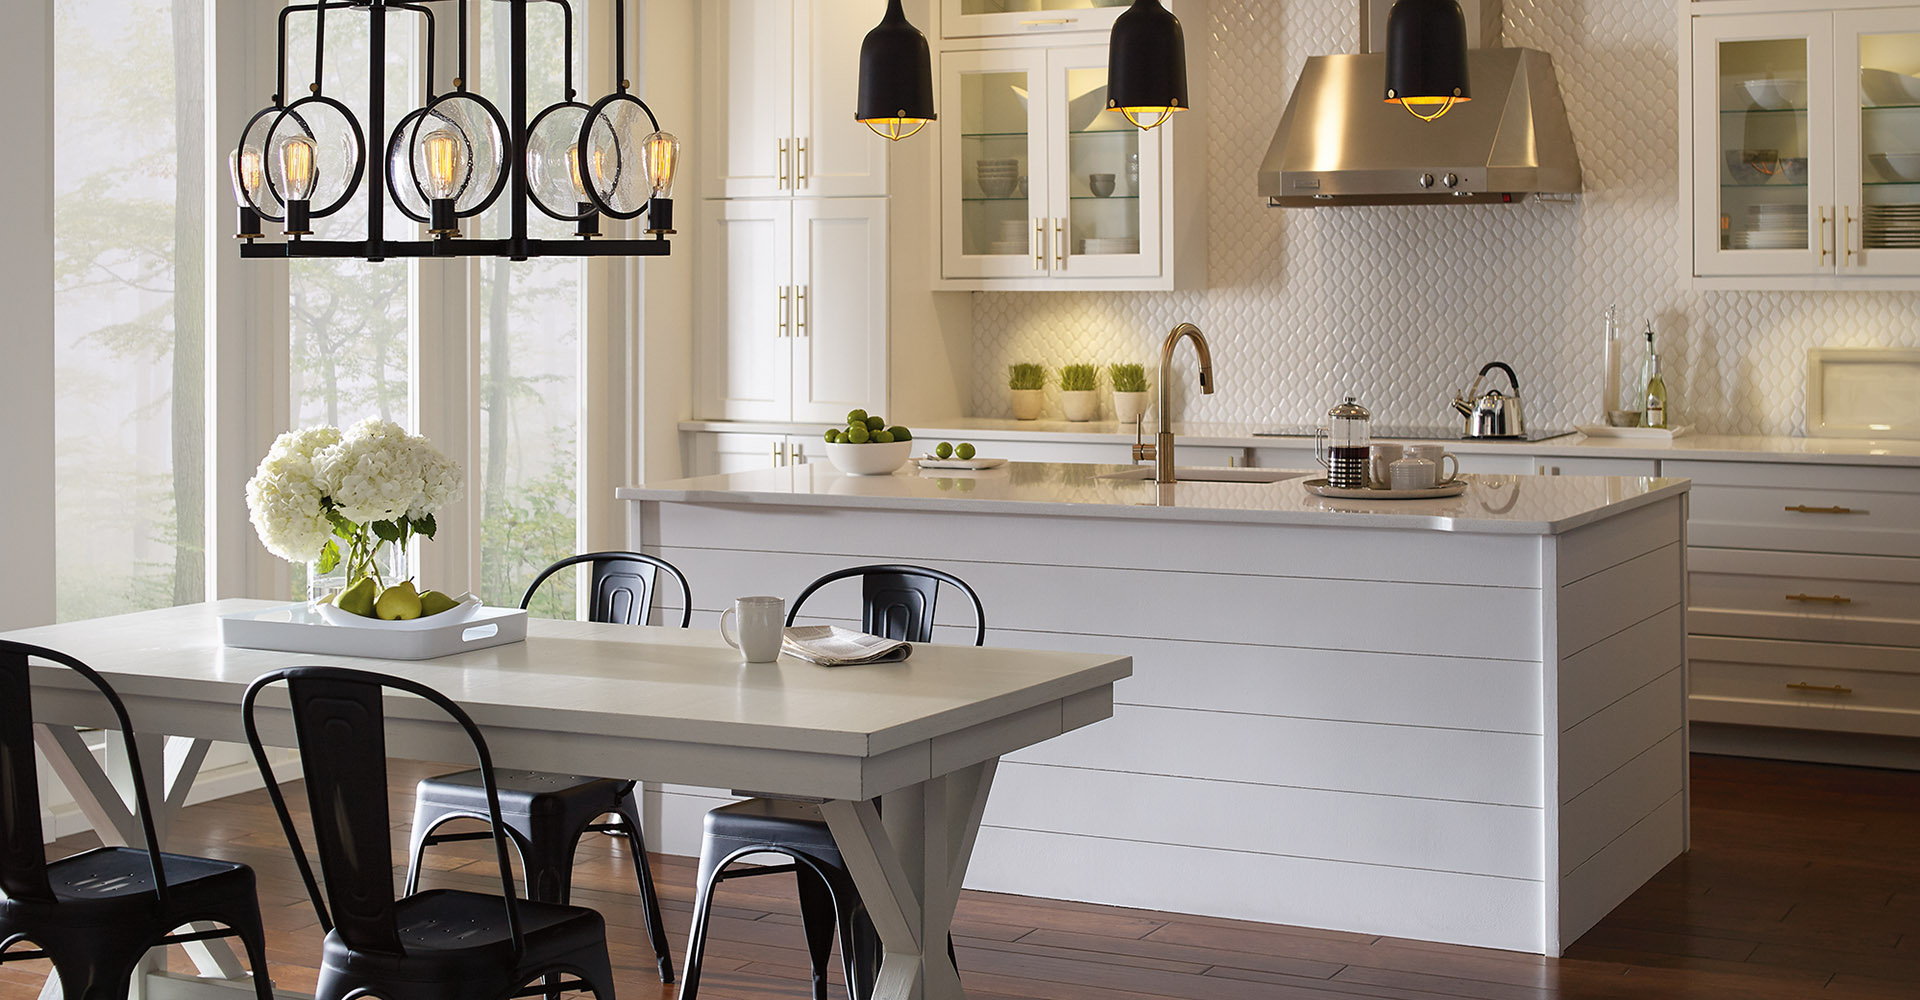 beautiful modern kitchen with pendant lighting